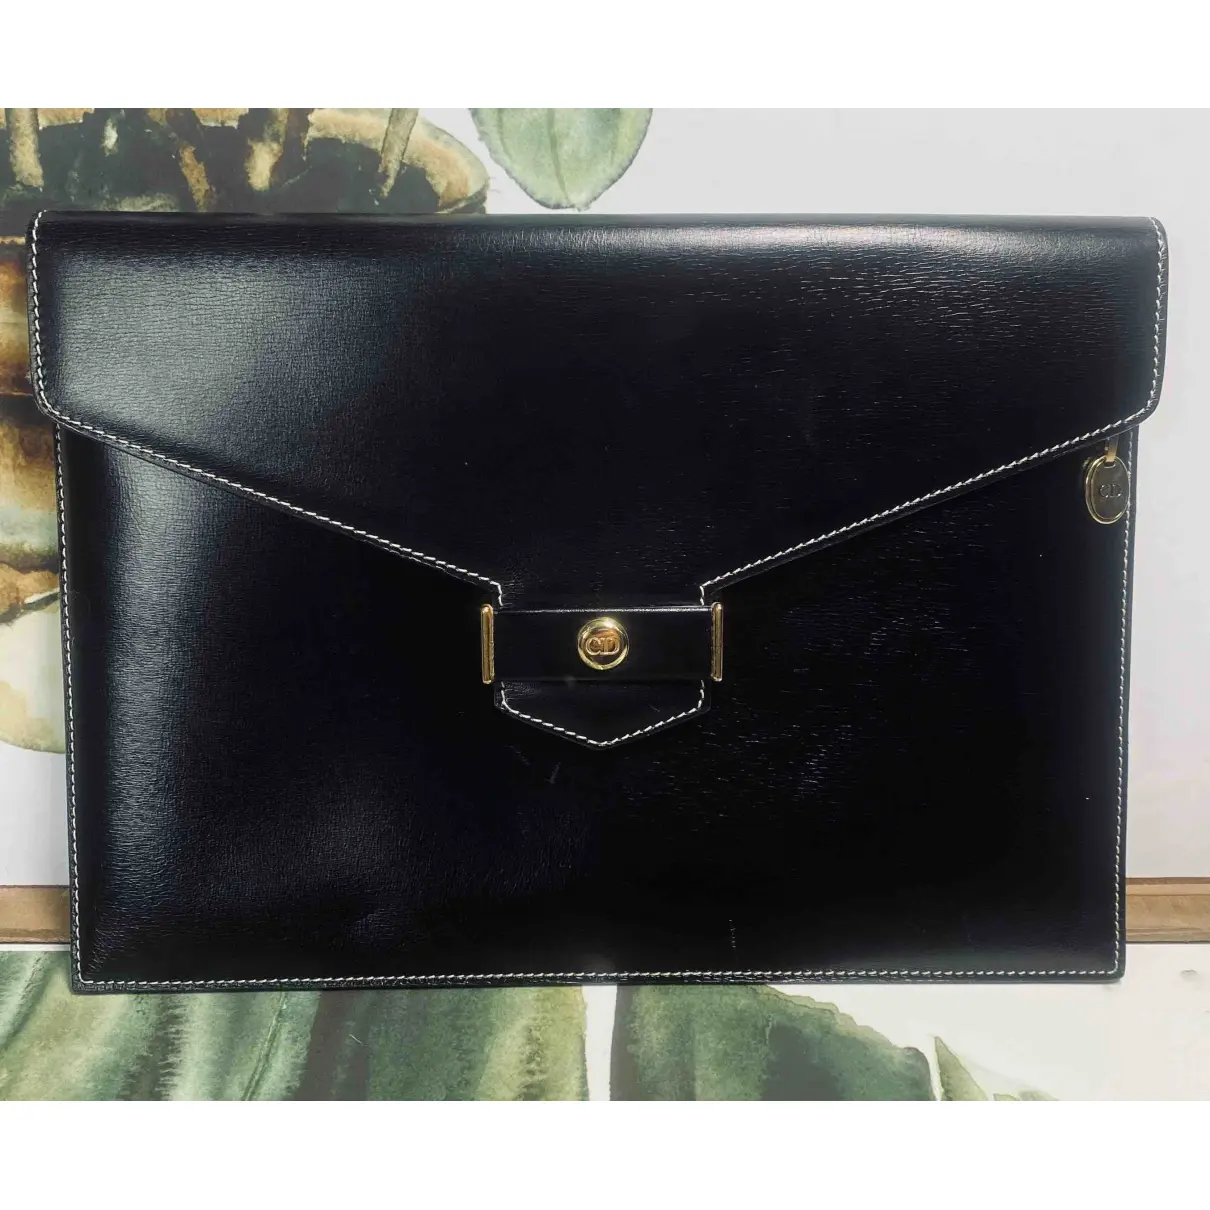 Buy Dior Leather small bag online - Vintage